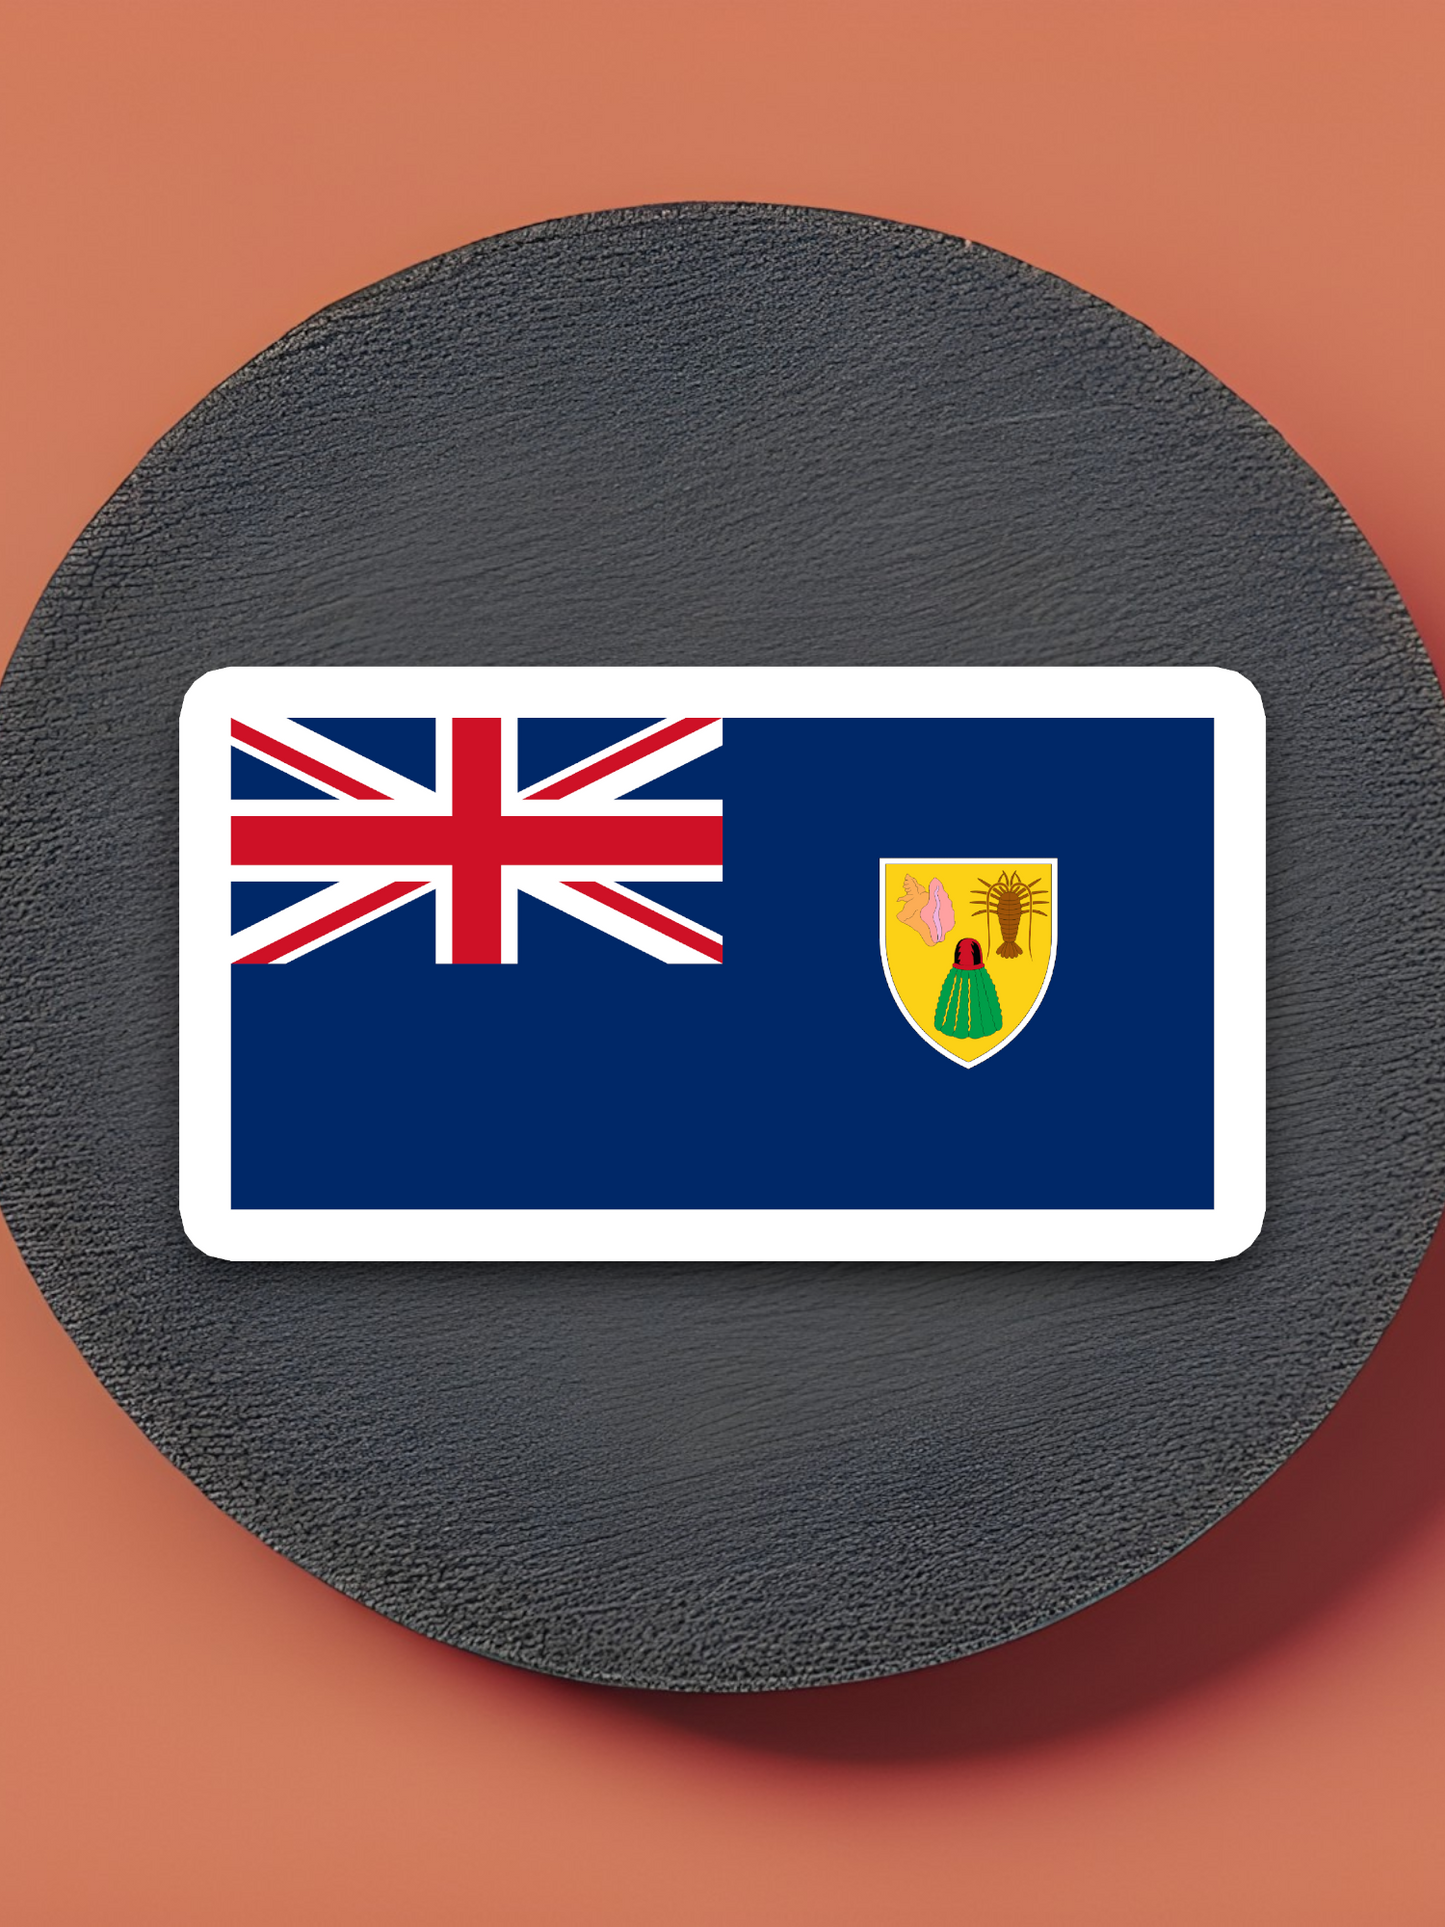 Turks and Caicos Flag - International Country Flag Sticker